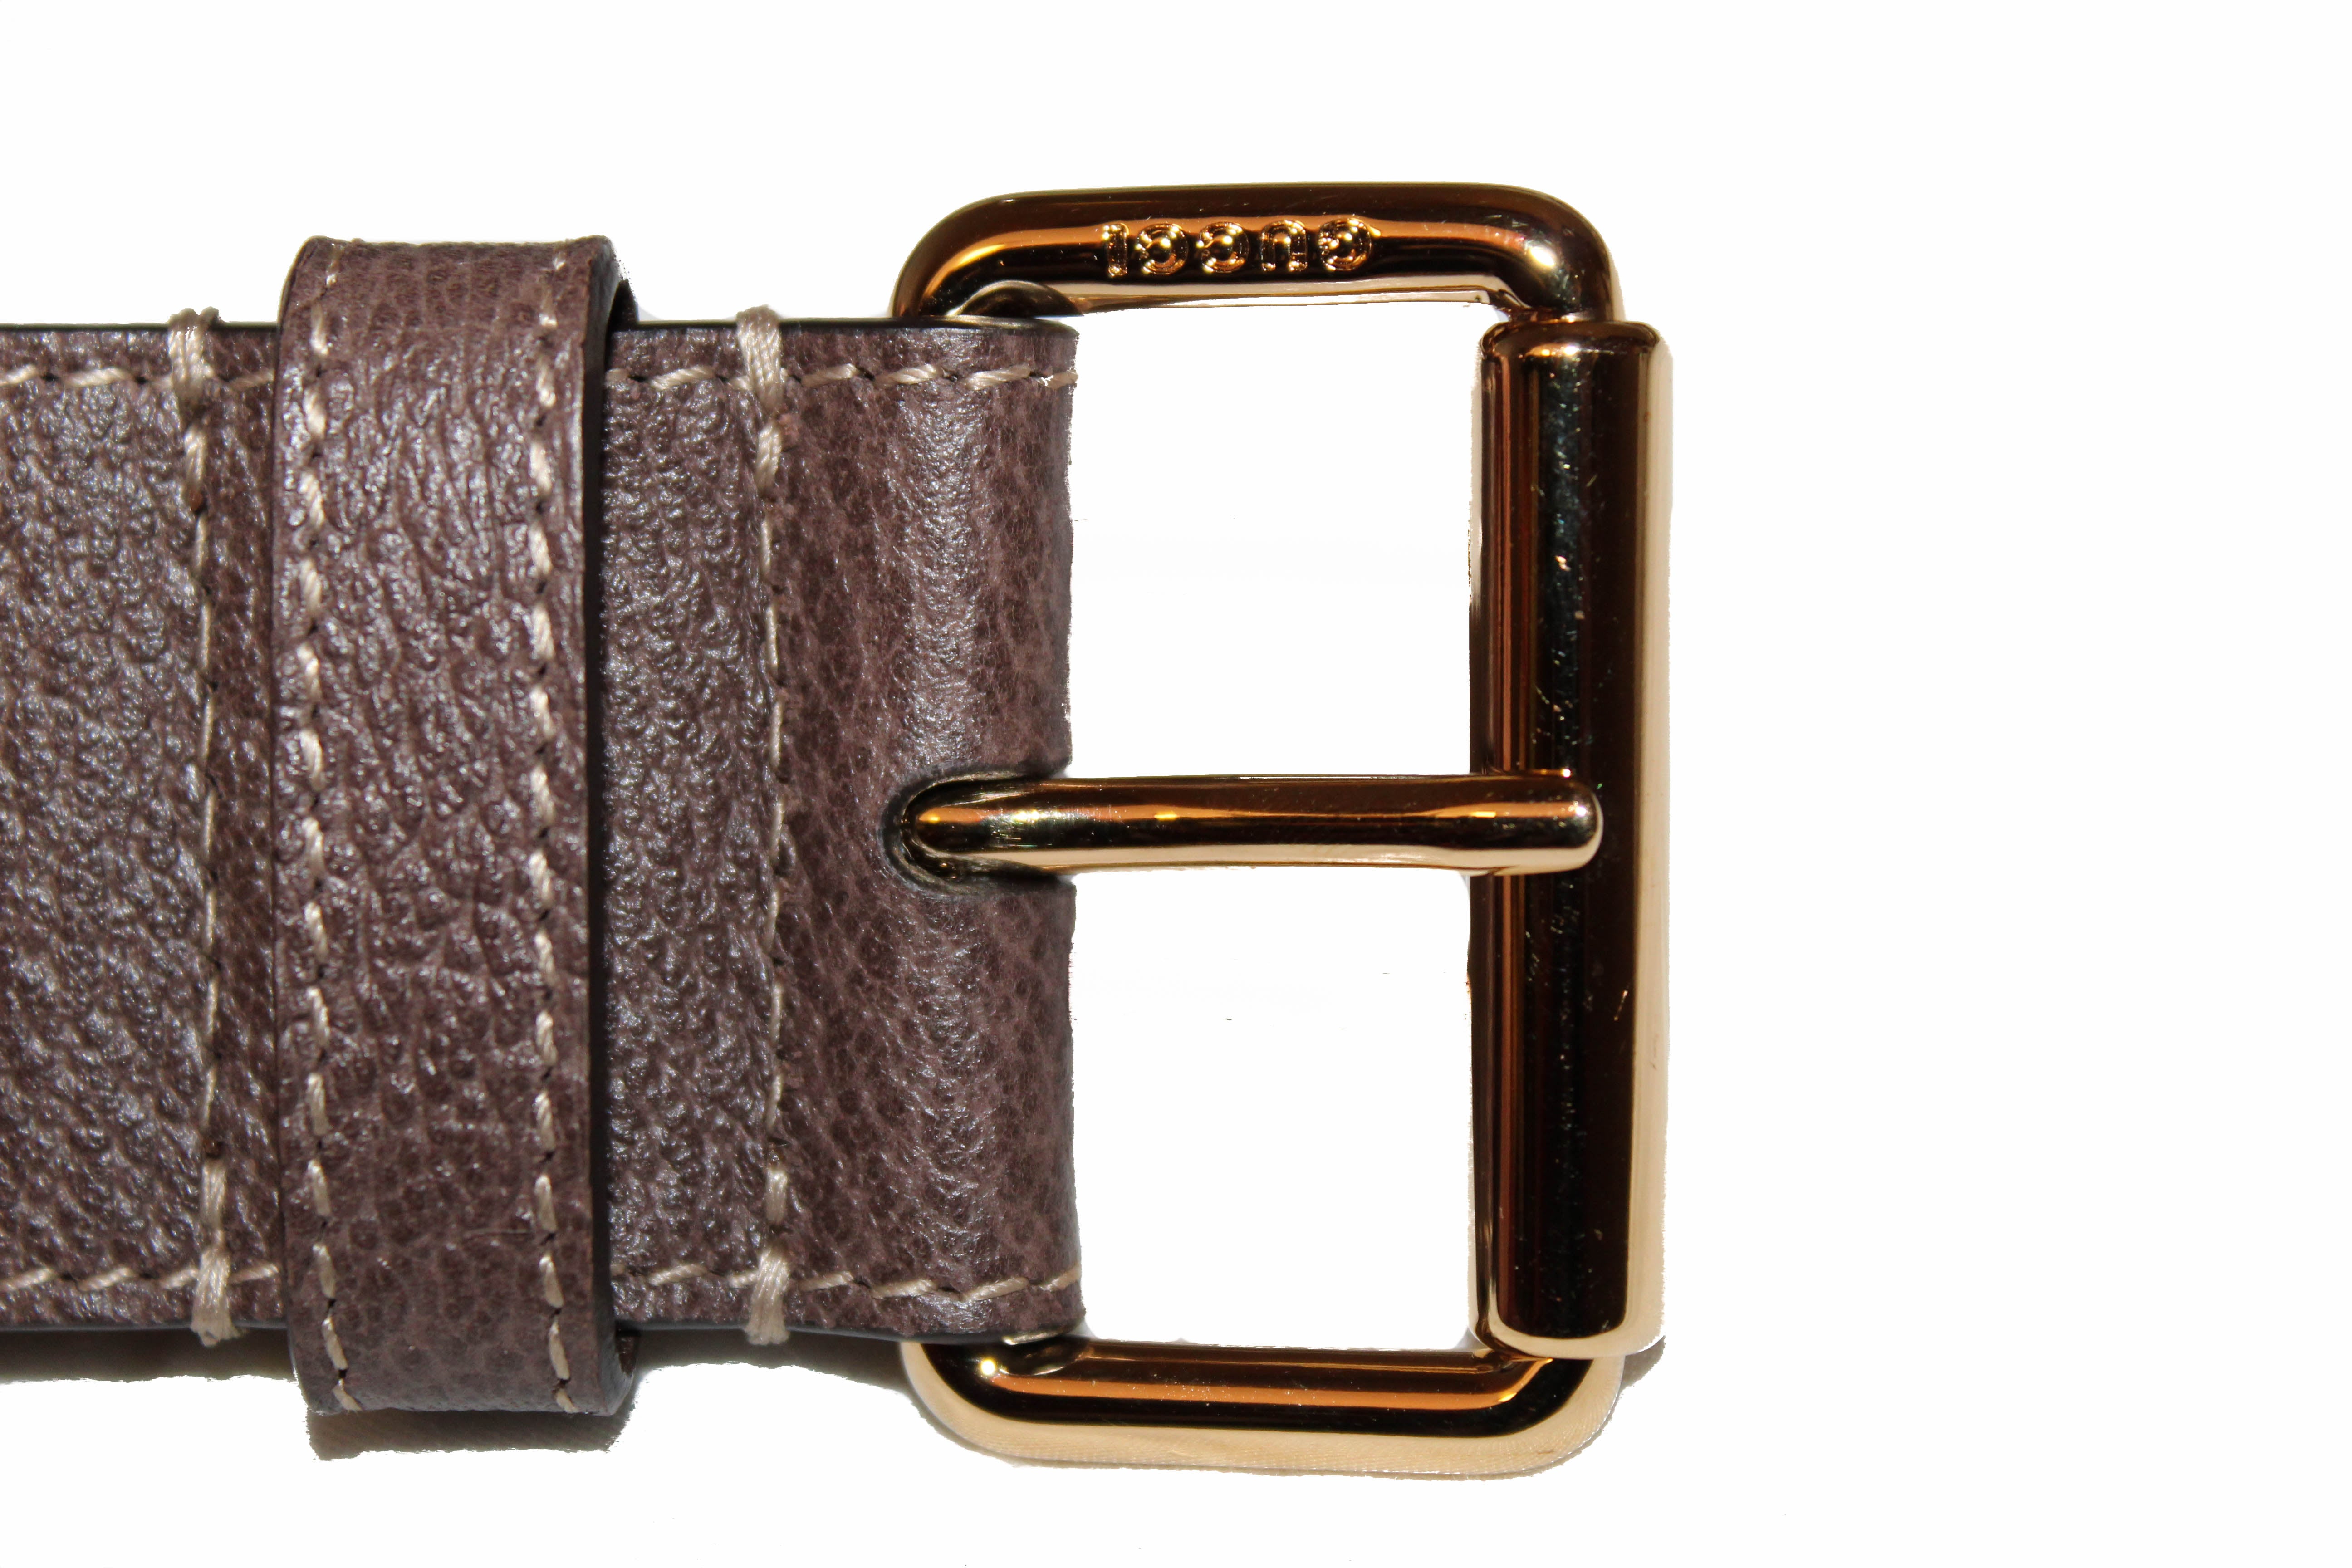 Authentic Gucci Ophidia GG Supreme Canvas Mini Belt Bag